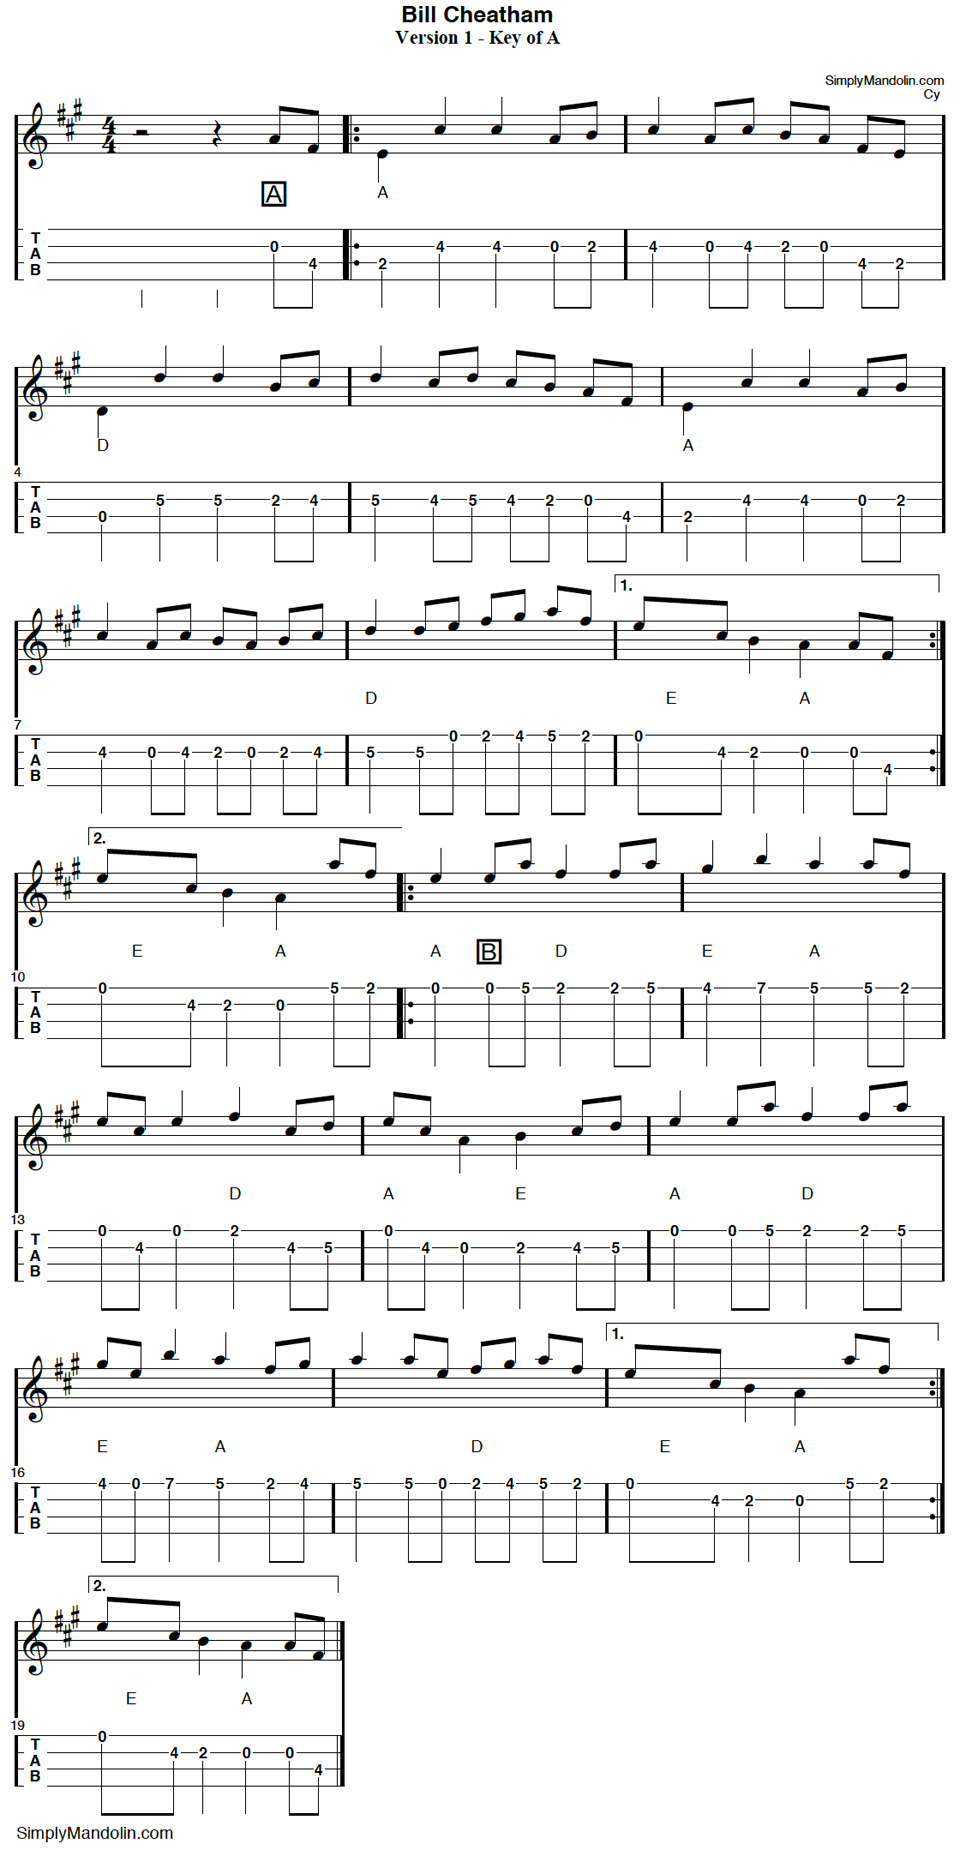 Image of mandolin tab for the tune "Bill Cheatham".